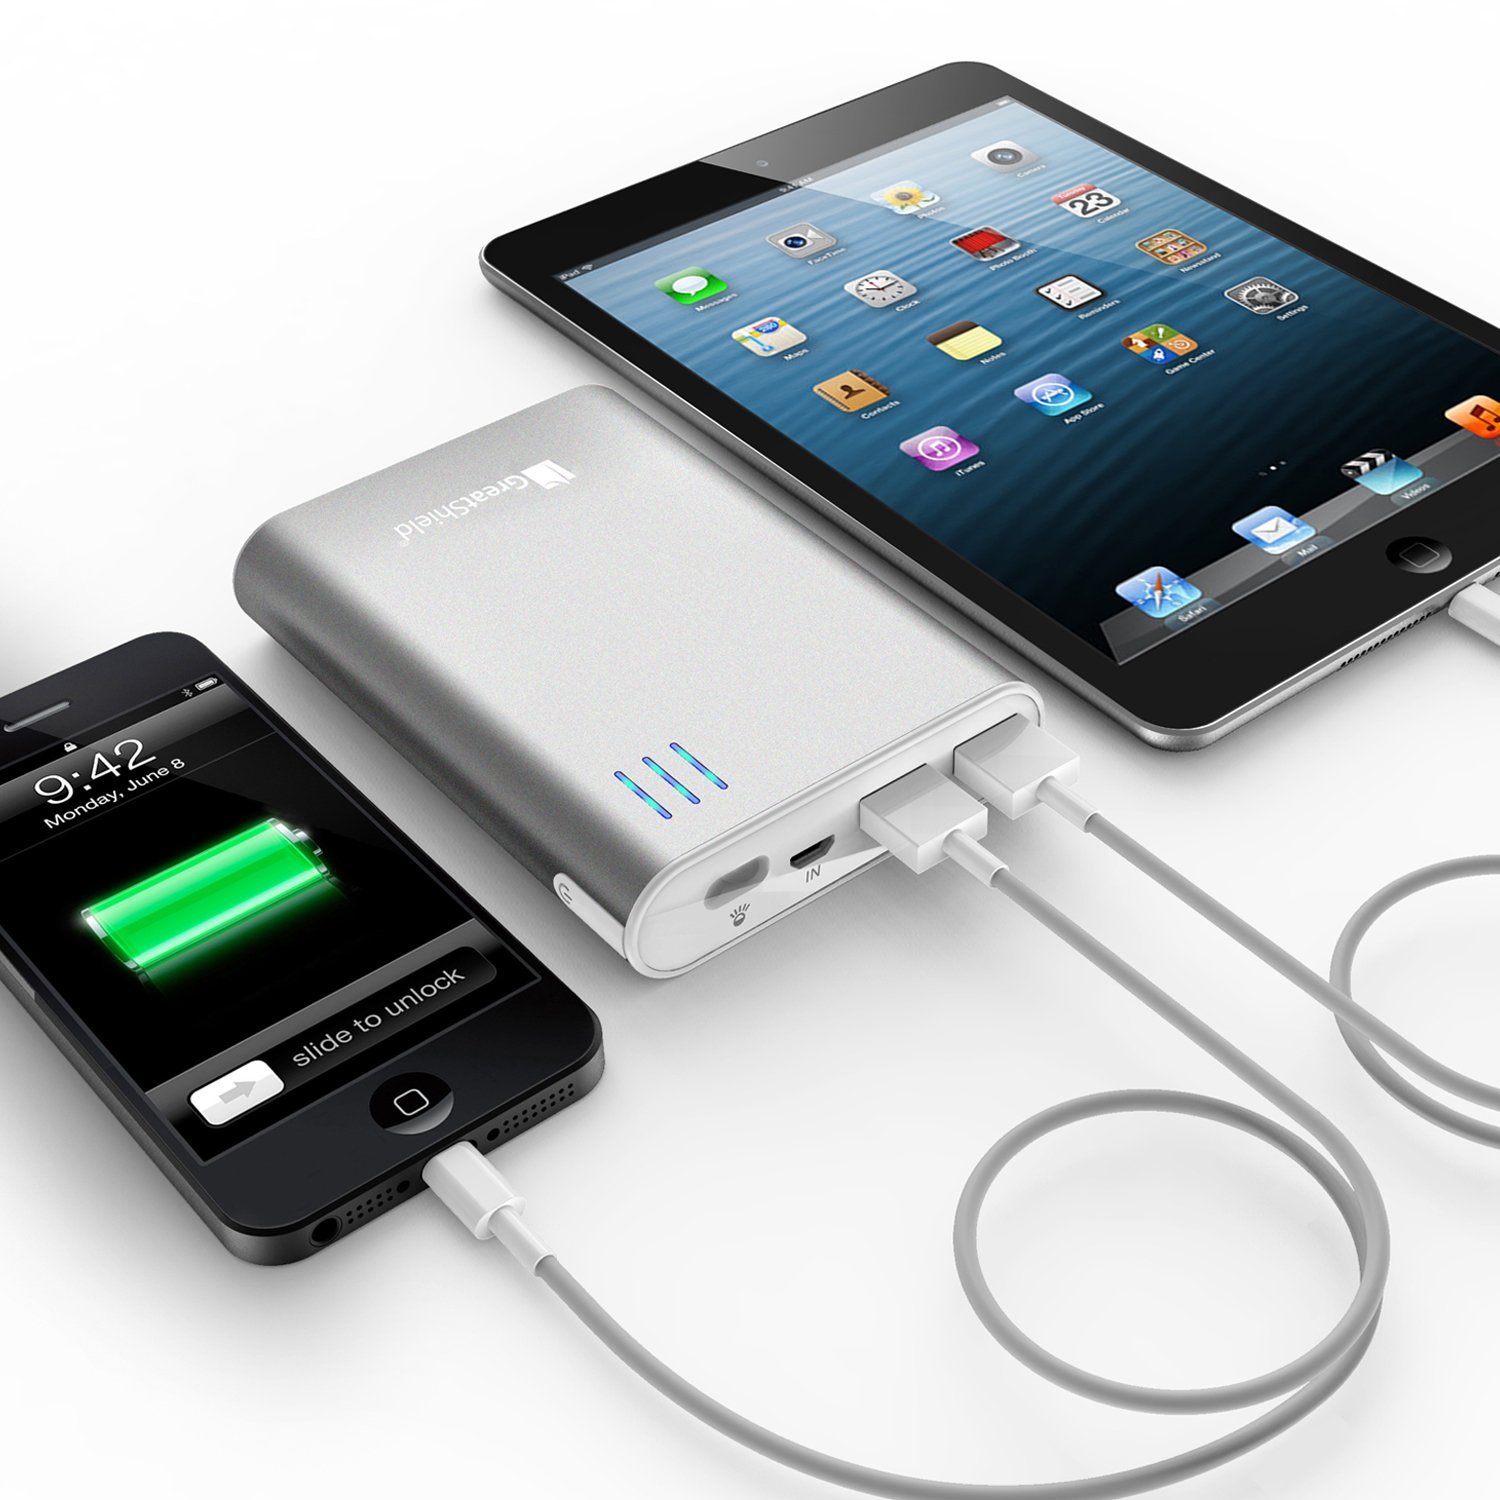 Portable battery. Charger mobile Power Bank. Battery Charger Power Bank. Portable Power Bank. Smart mobile пауэрбанк.